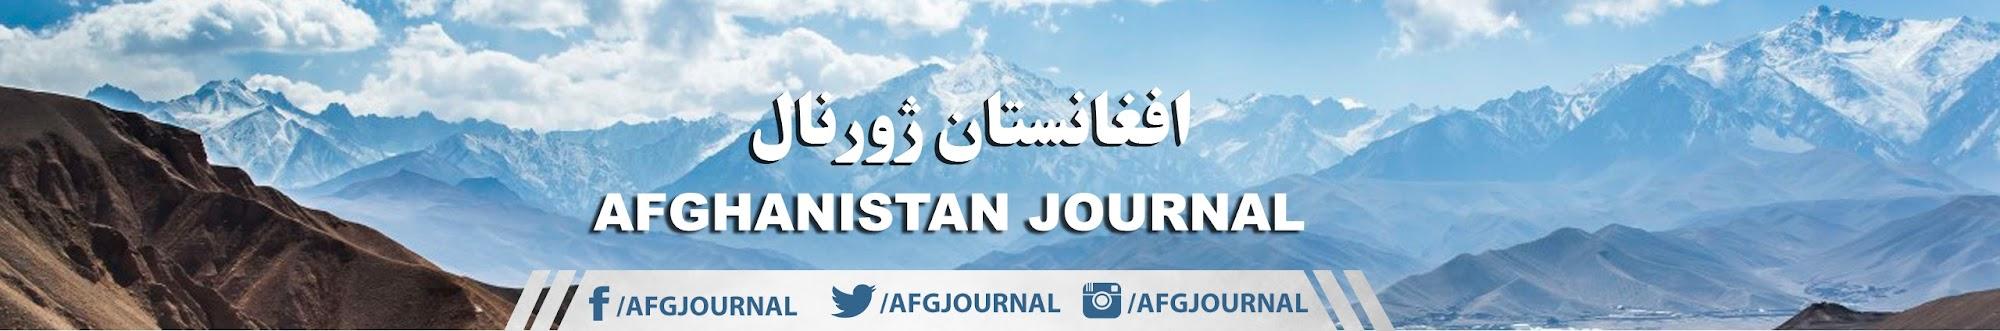 Afghanistan Journal